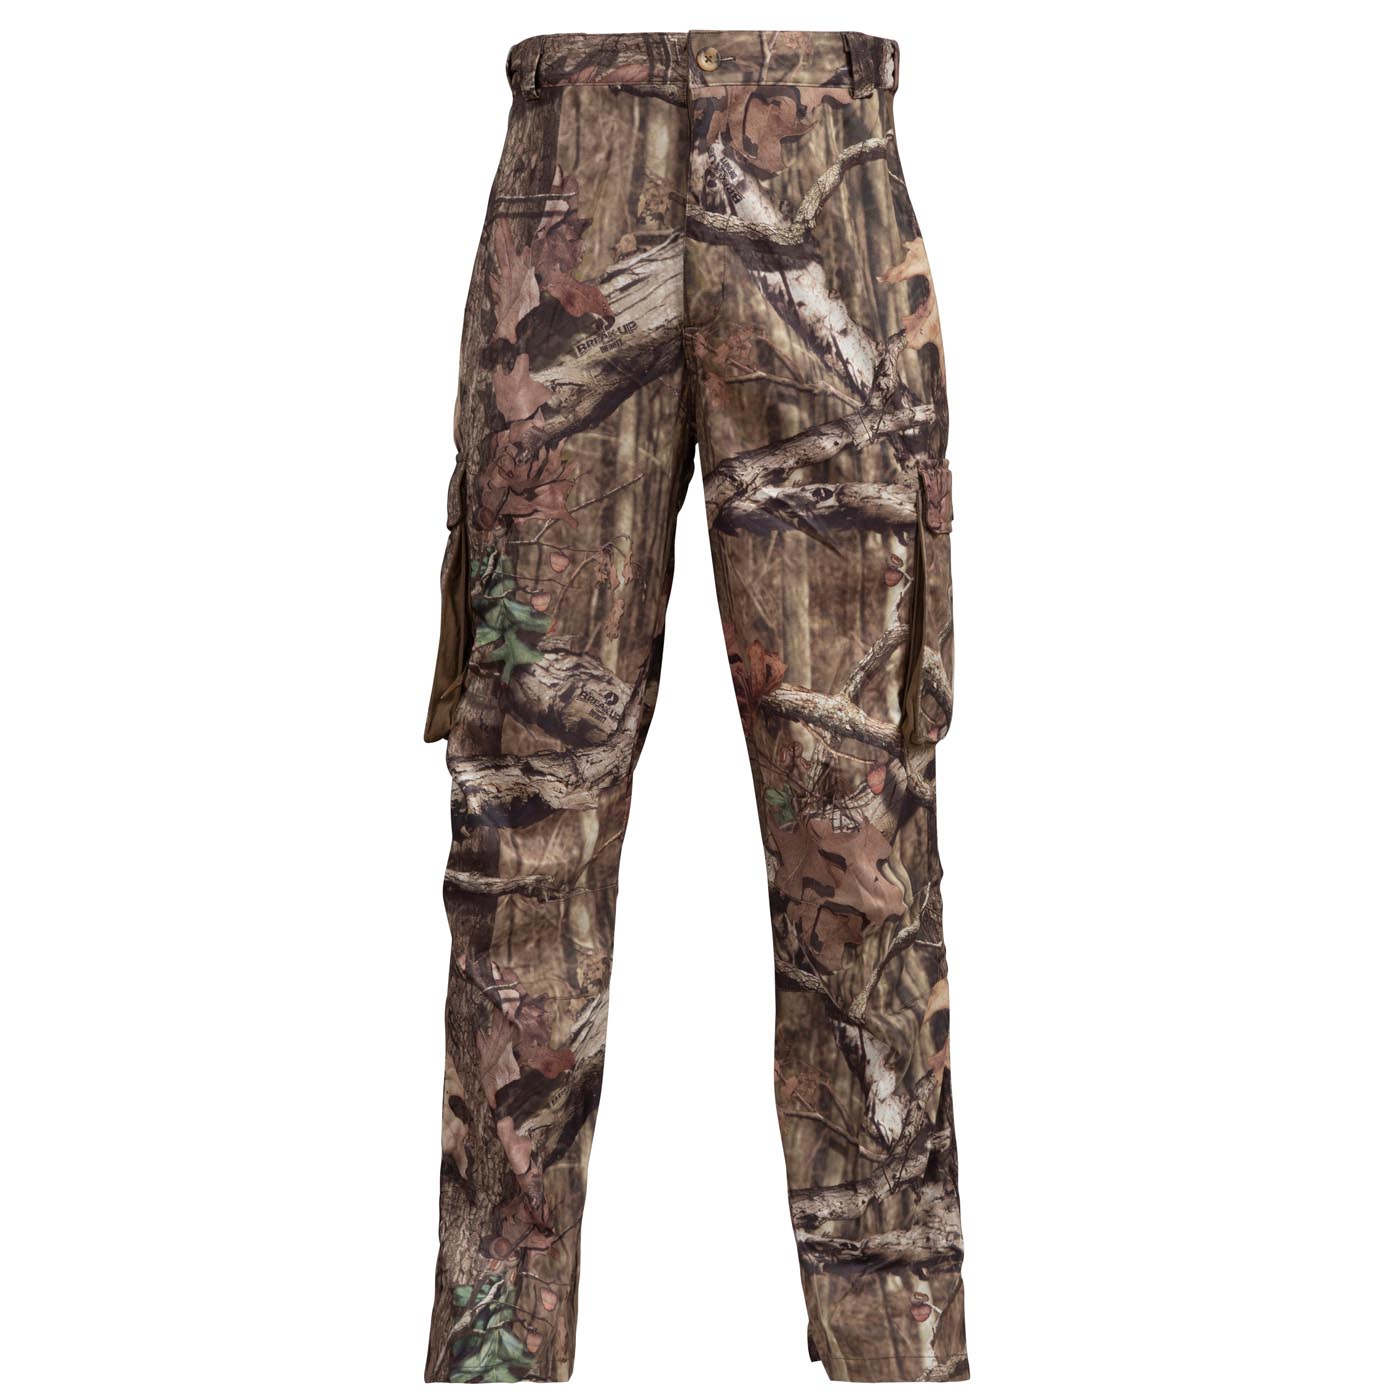 Men's Camouflage Cargo Pants - Rocky SilentHunter#600555